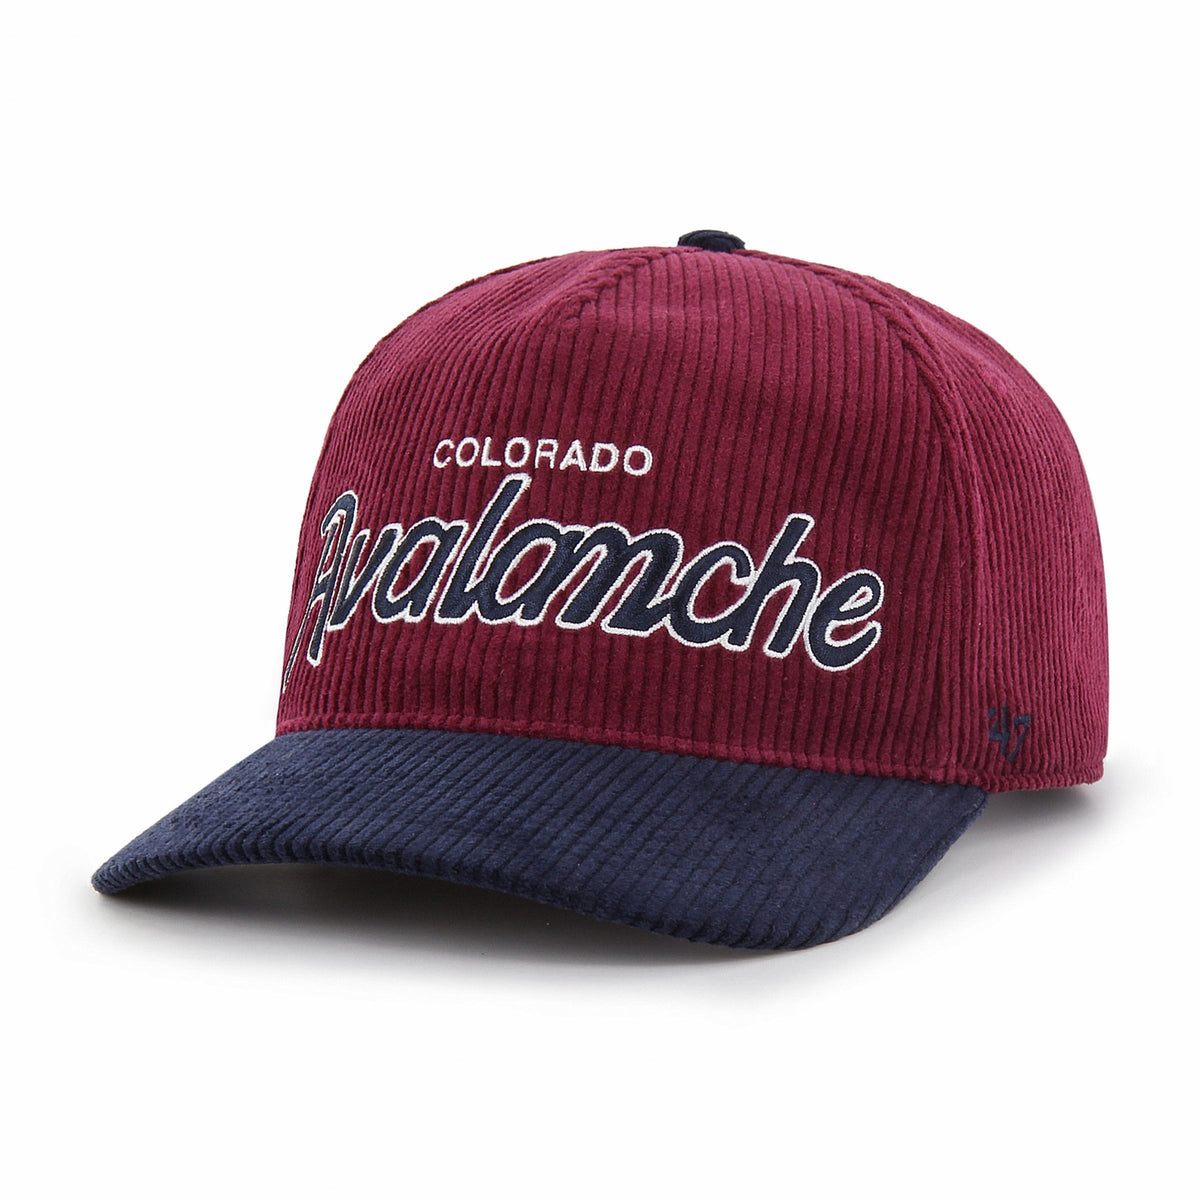 Colorado Avalanche '47 Captain Snapback Hat - Burgundy